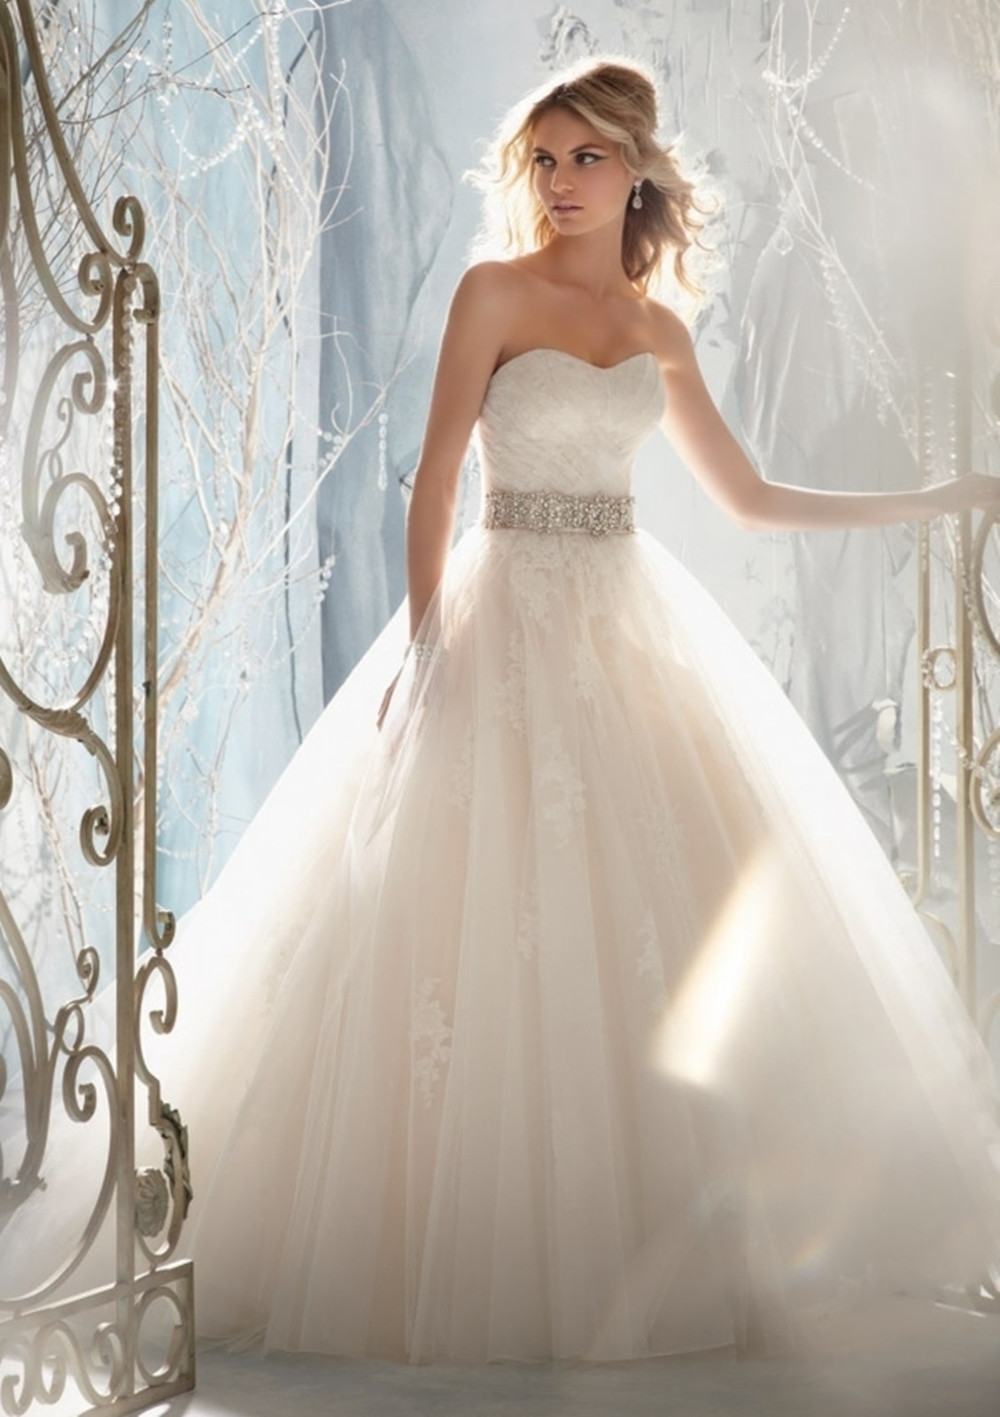 New whiteivory wedding dress custom size 2-4-6-8-10-12-14-16-18-20-22 ...